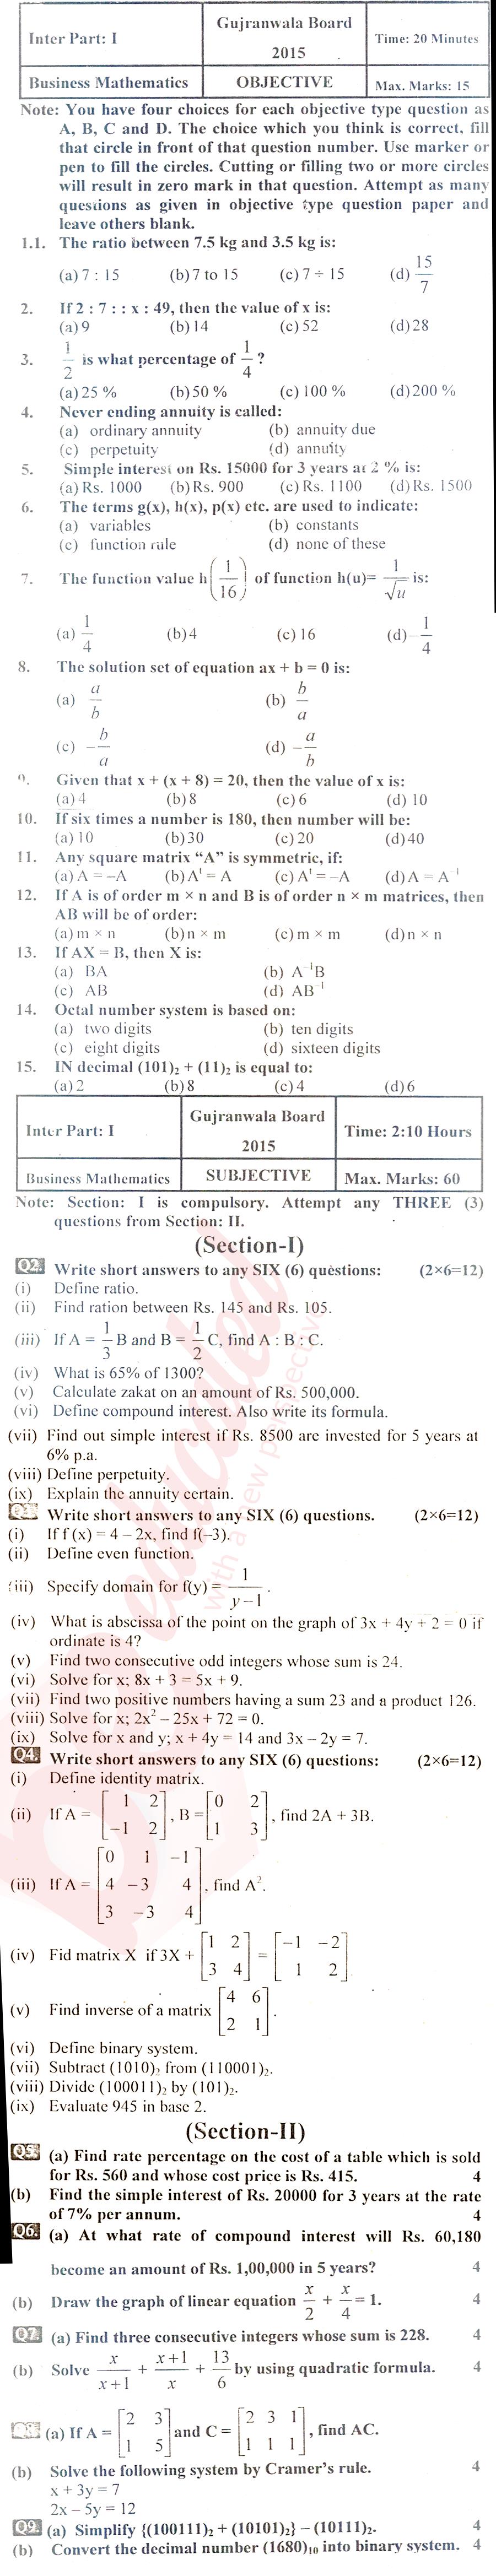 Business Mathematics ICOM Part 1 Past Paper Group 1 BISE Gujranwala 2015